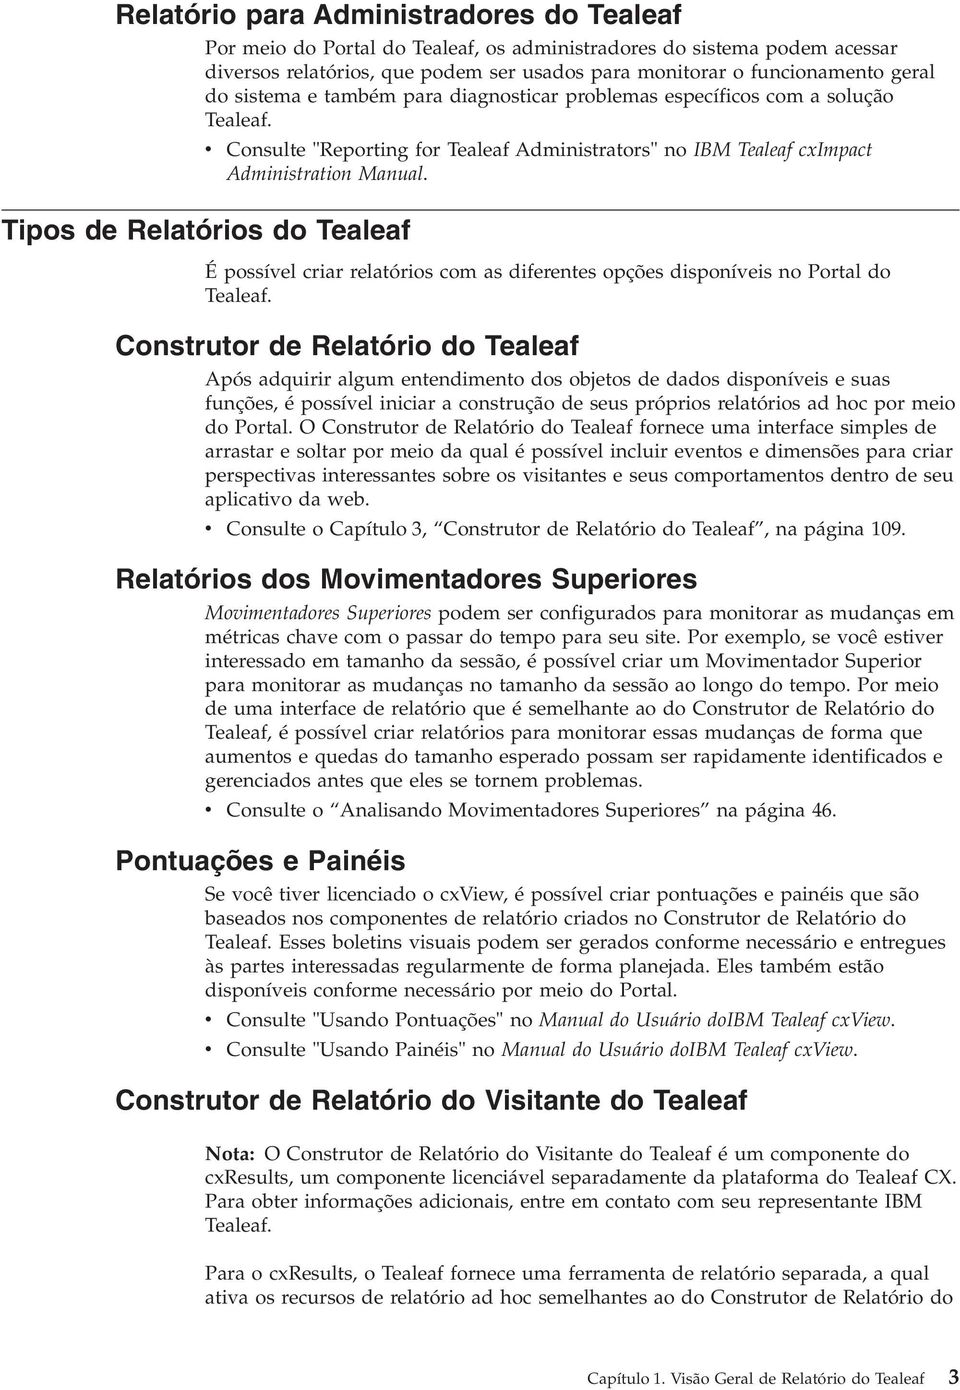 Tipos de Relatórios do Tealeaf Consulte "Reporting for Tealeaf Administrators" no IBM Tealeaf cximpact Administration Manual.